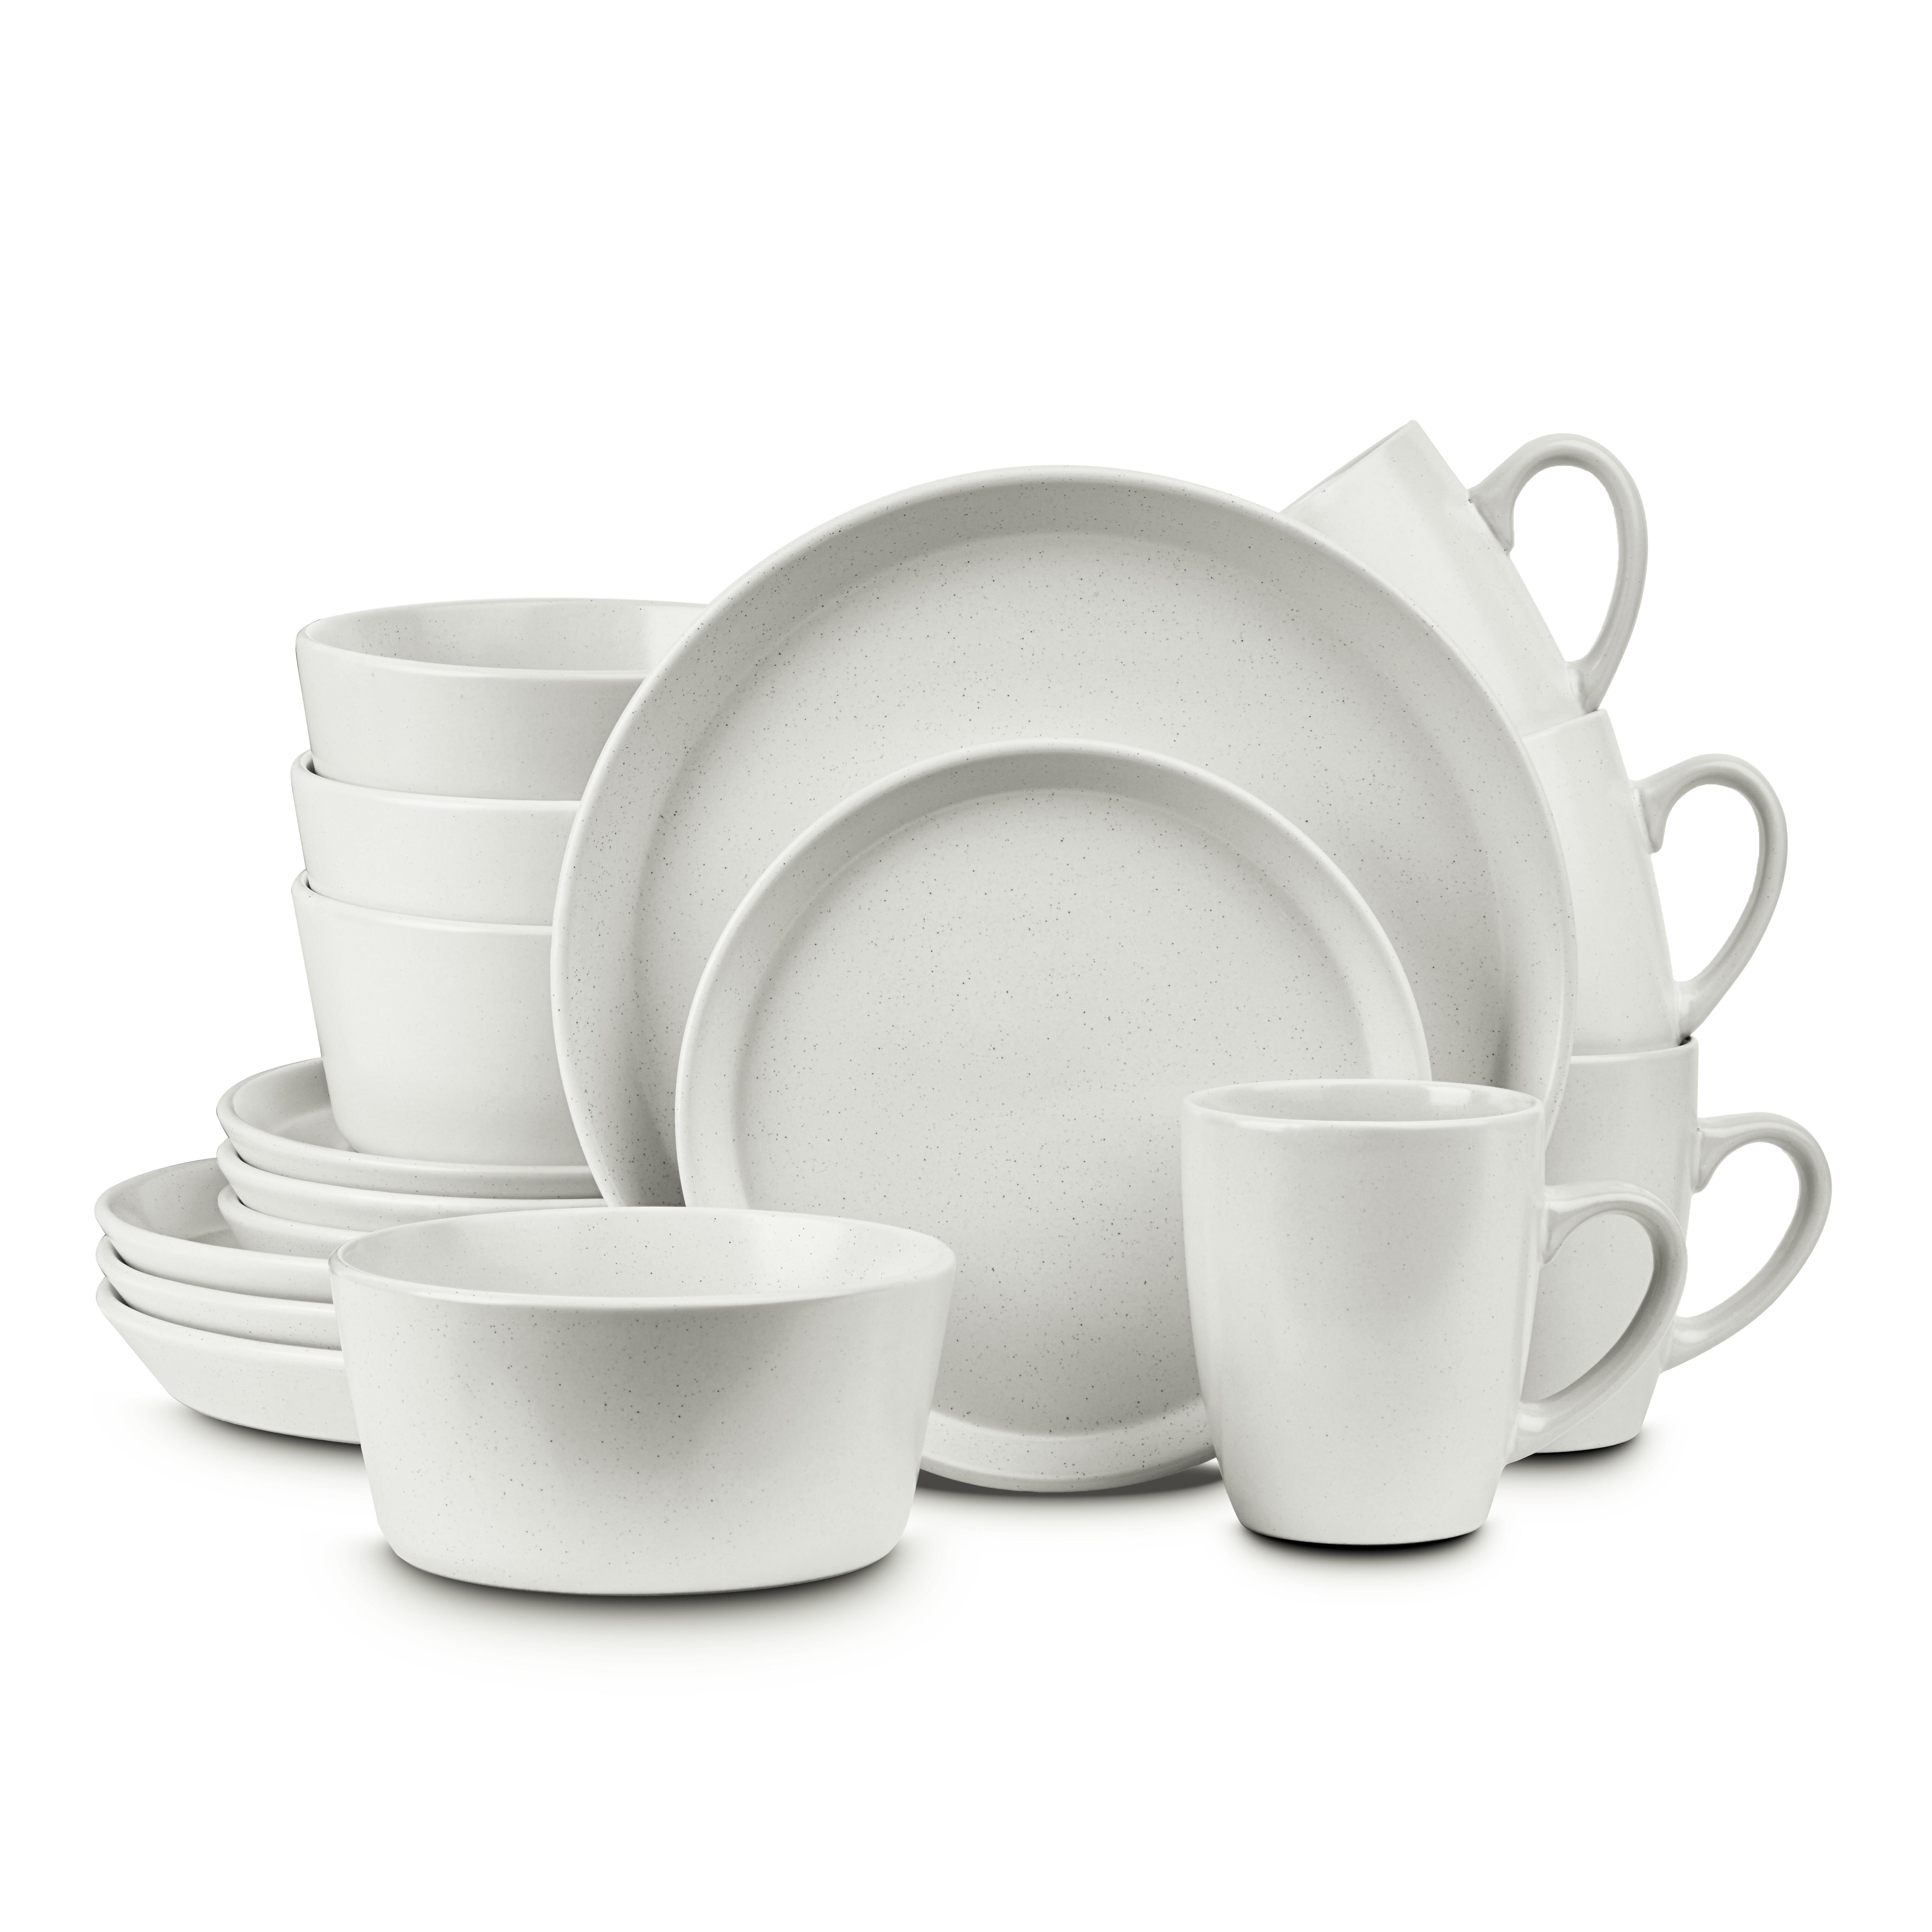 Details about   12 Piece Porcelain Square Dinner Set Plates Bowl Dining Set Service for 4 Person